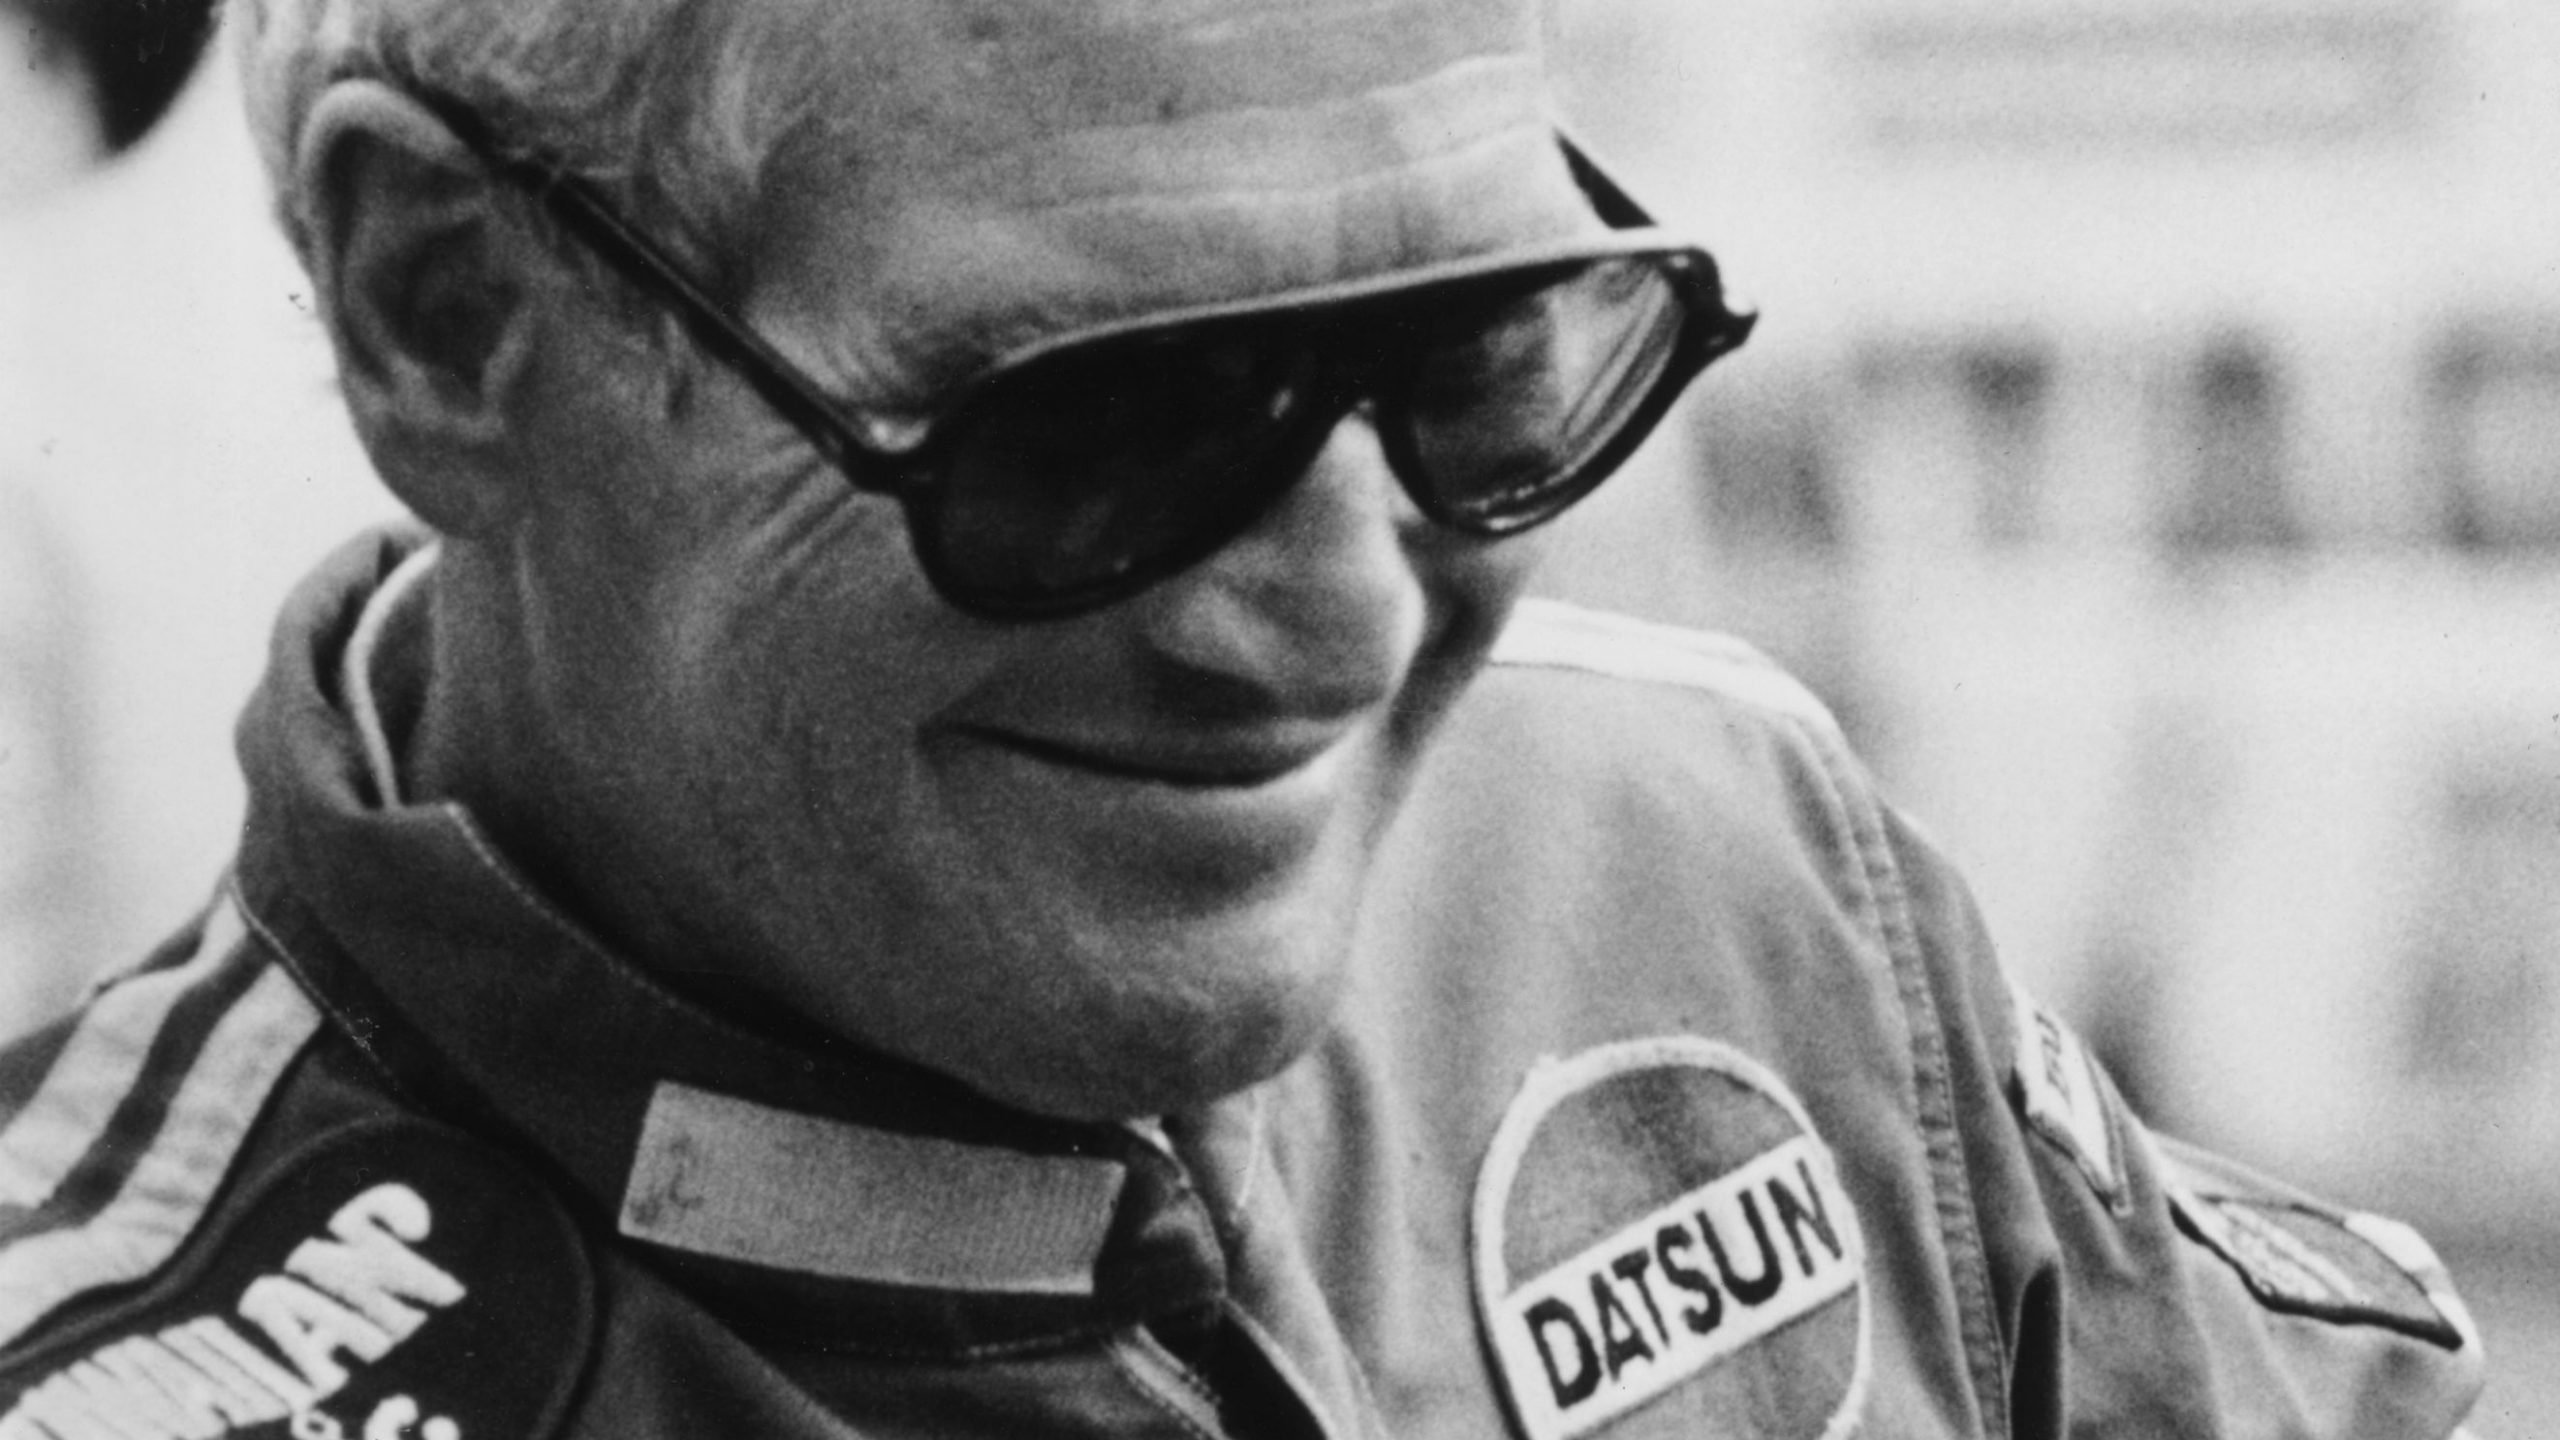 Paul Newman con gafas de sol